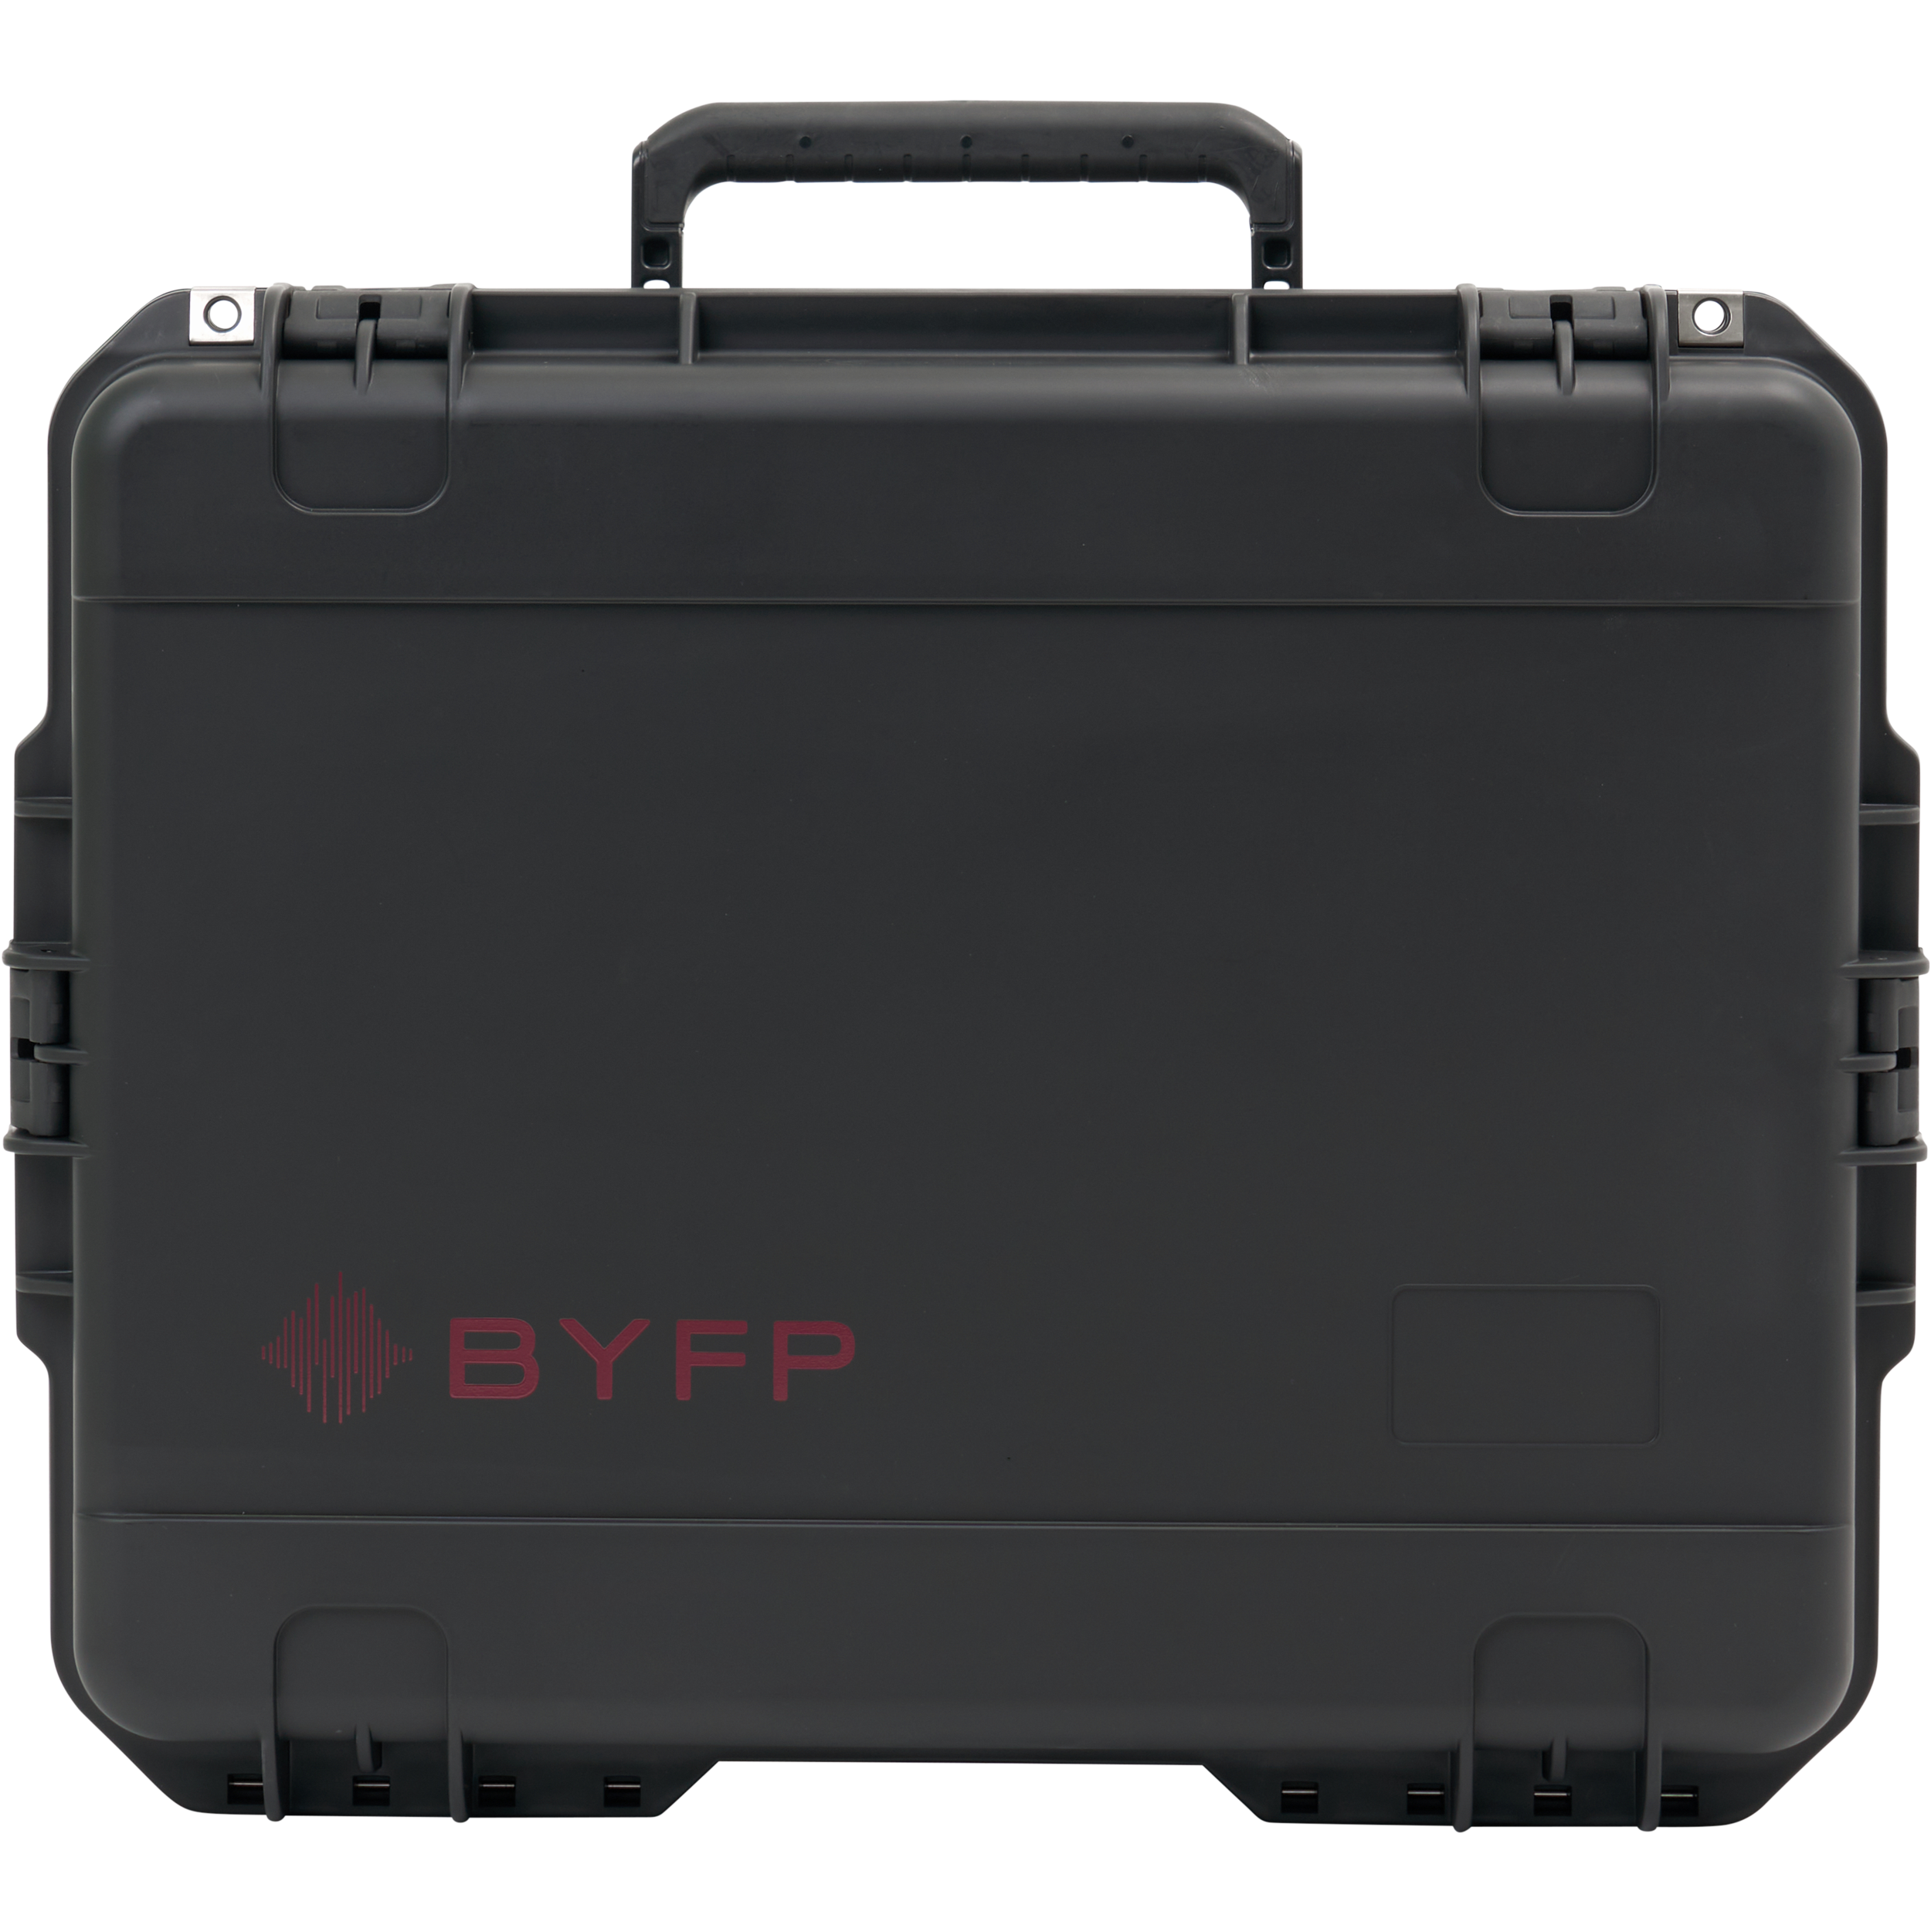 BYFP x SKB iSeries Case for Pioneer DJM-900NXS2 Mixer